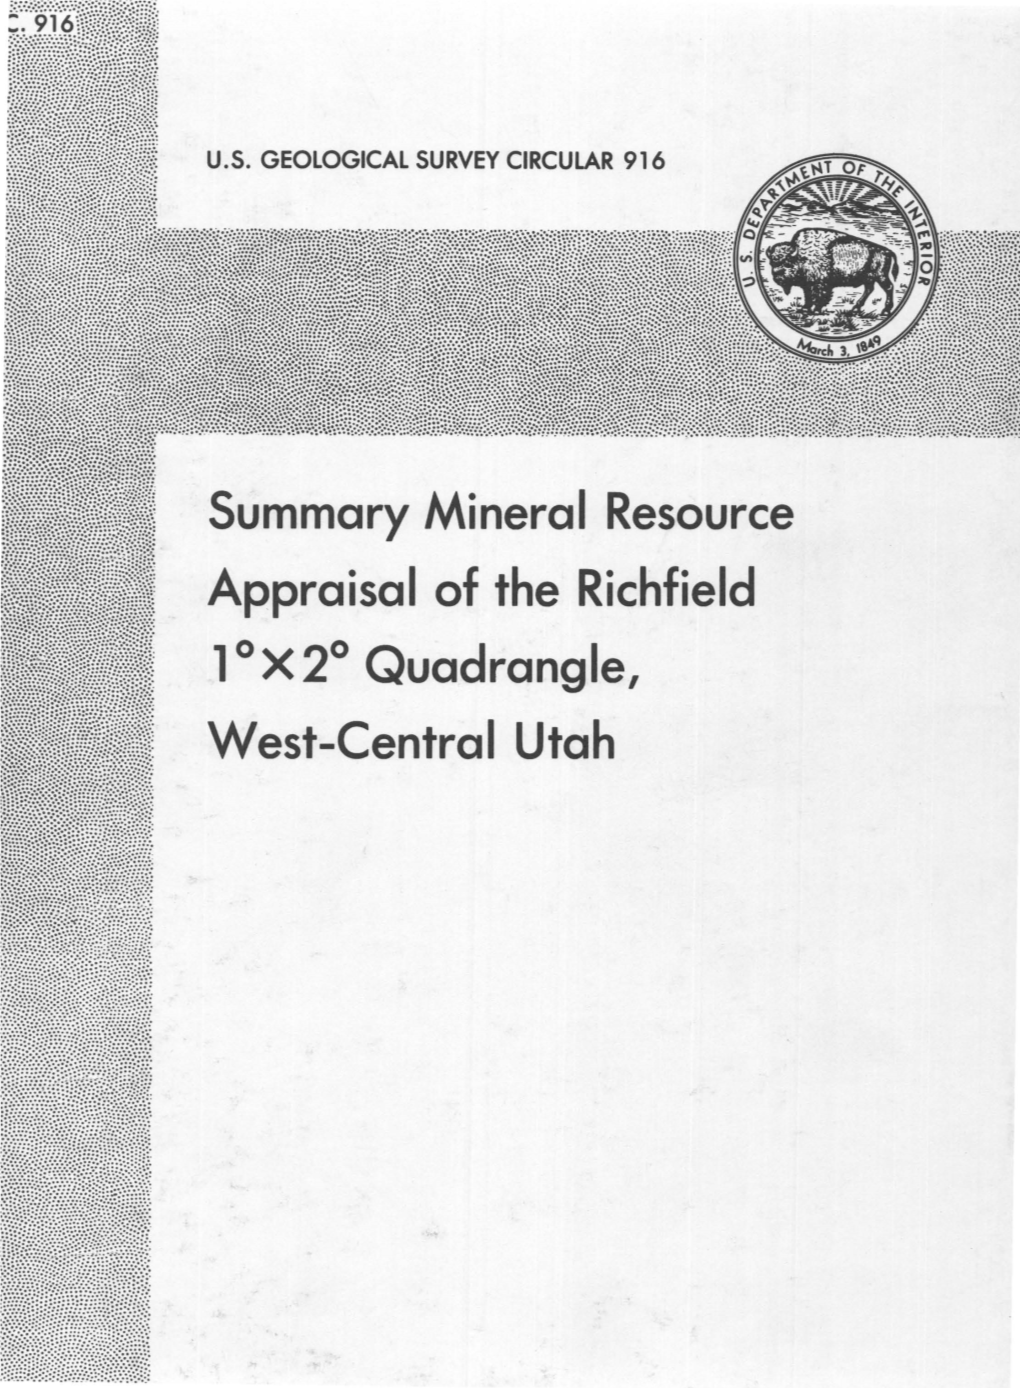 Summary Mineral Resource Appraisal of the Richfield 1 °X2° Quadrangle